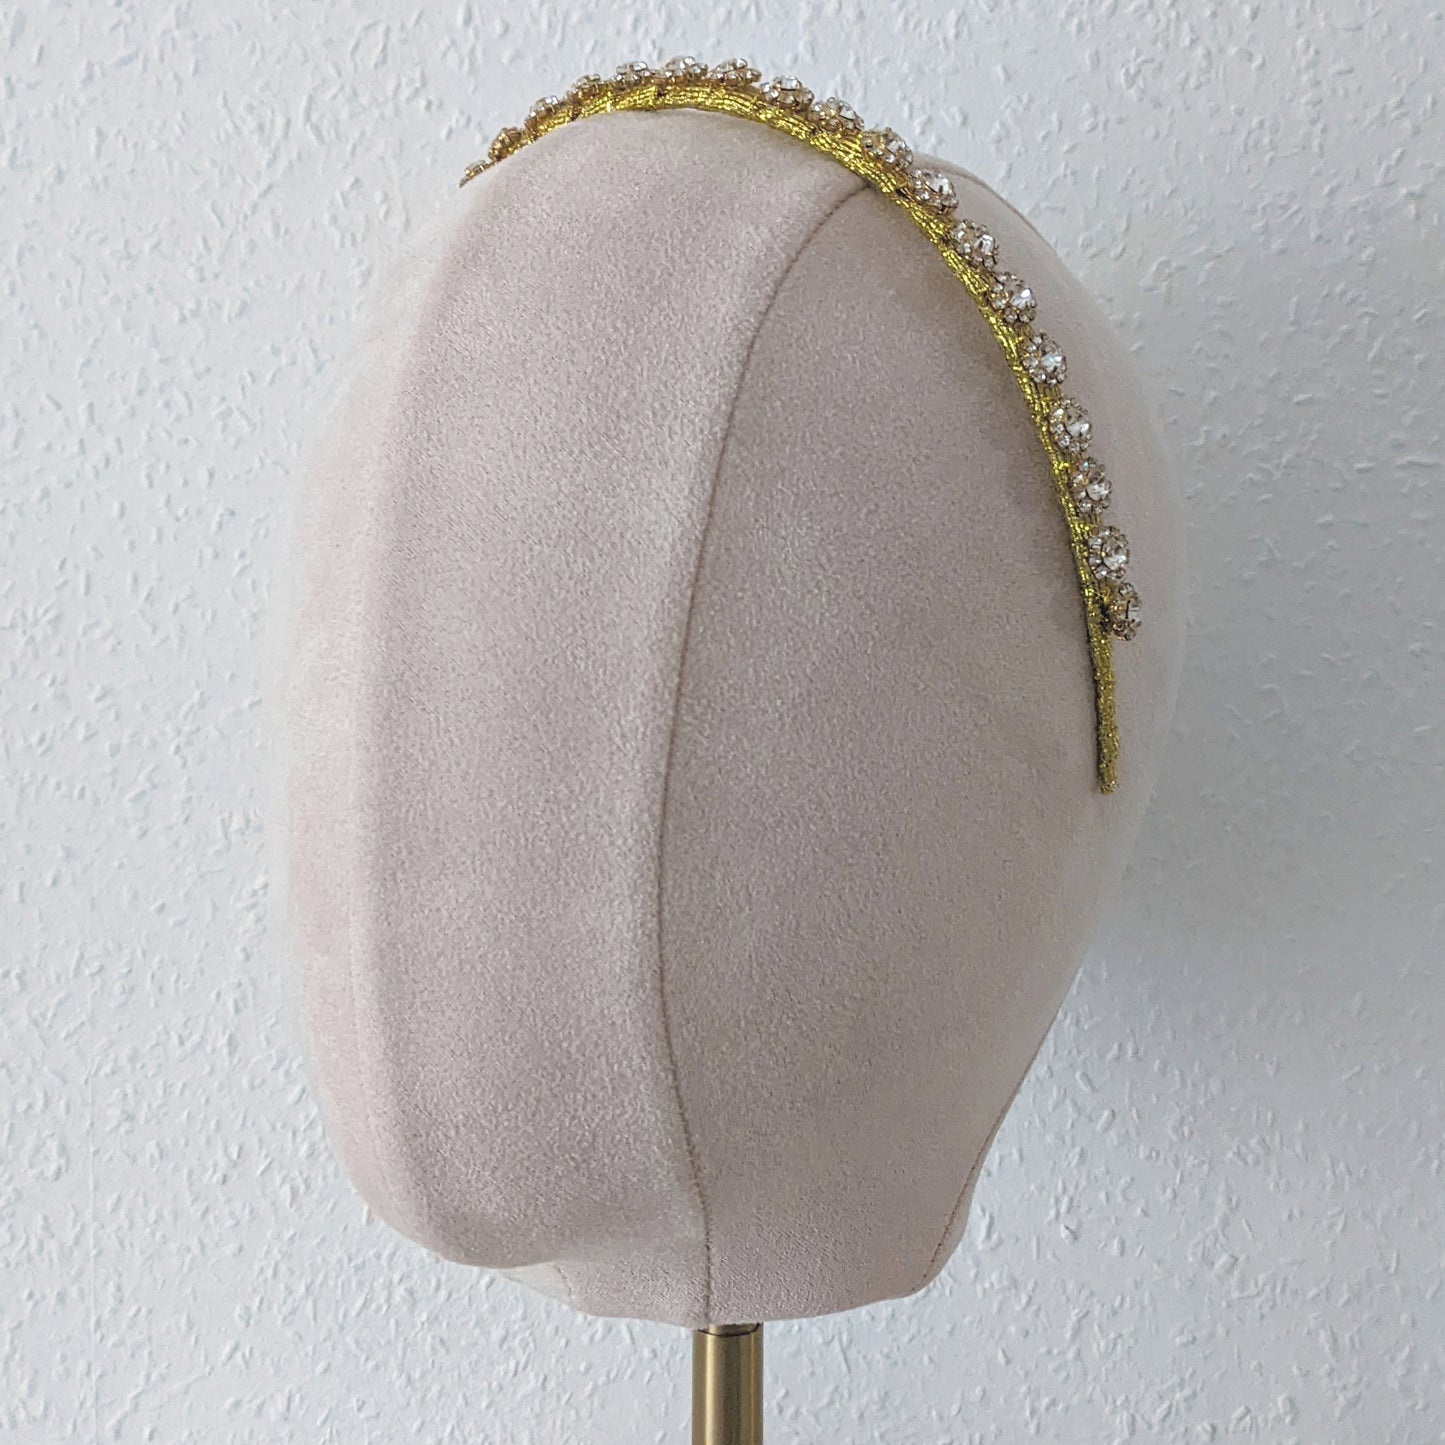 Joyful Gold Crystal Flower Headband